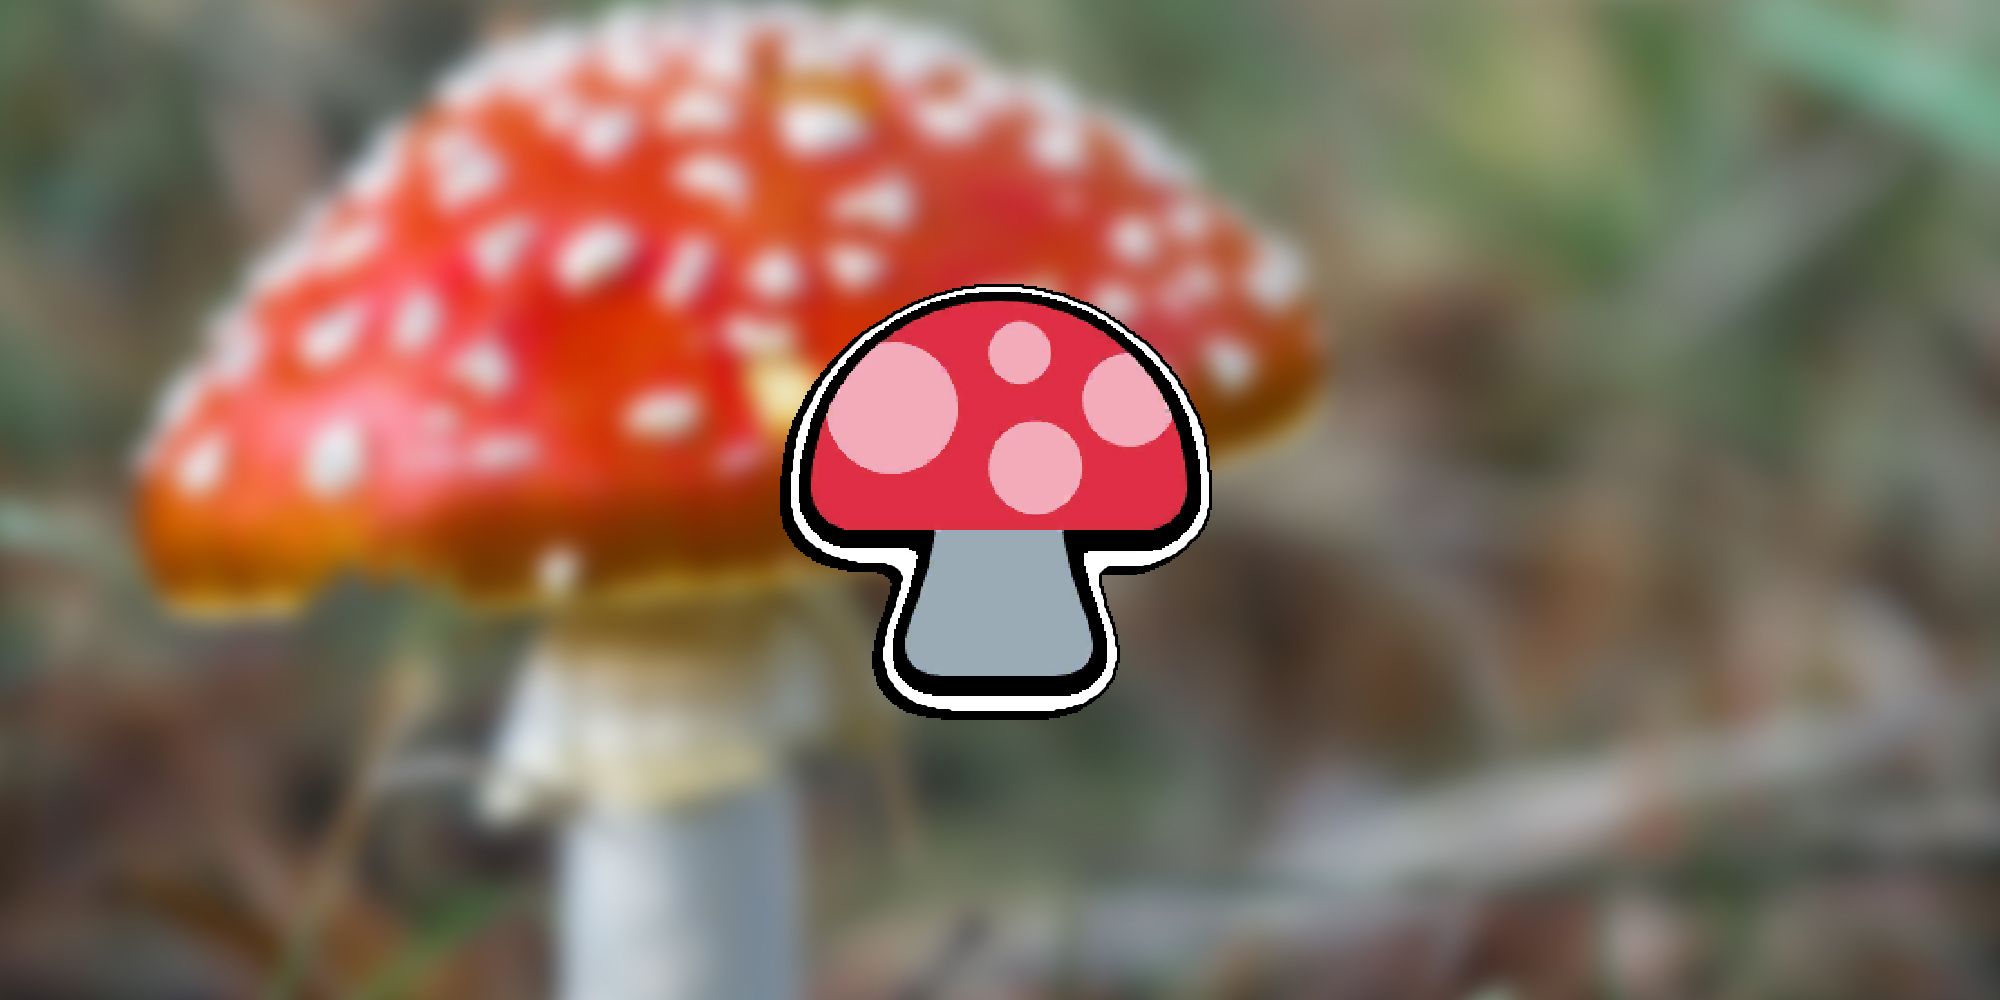 Super Auto Pets - In-Game Mushroom Item PNG Overlaid On Image Of Very Similar Actual Mushroom